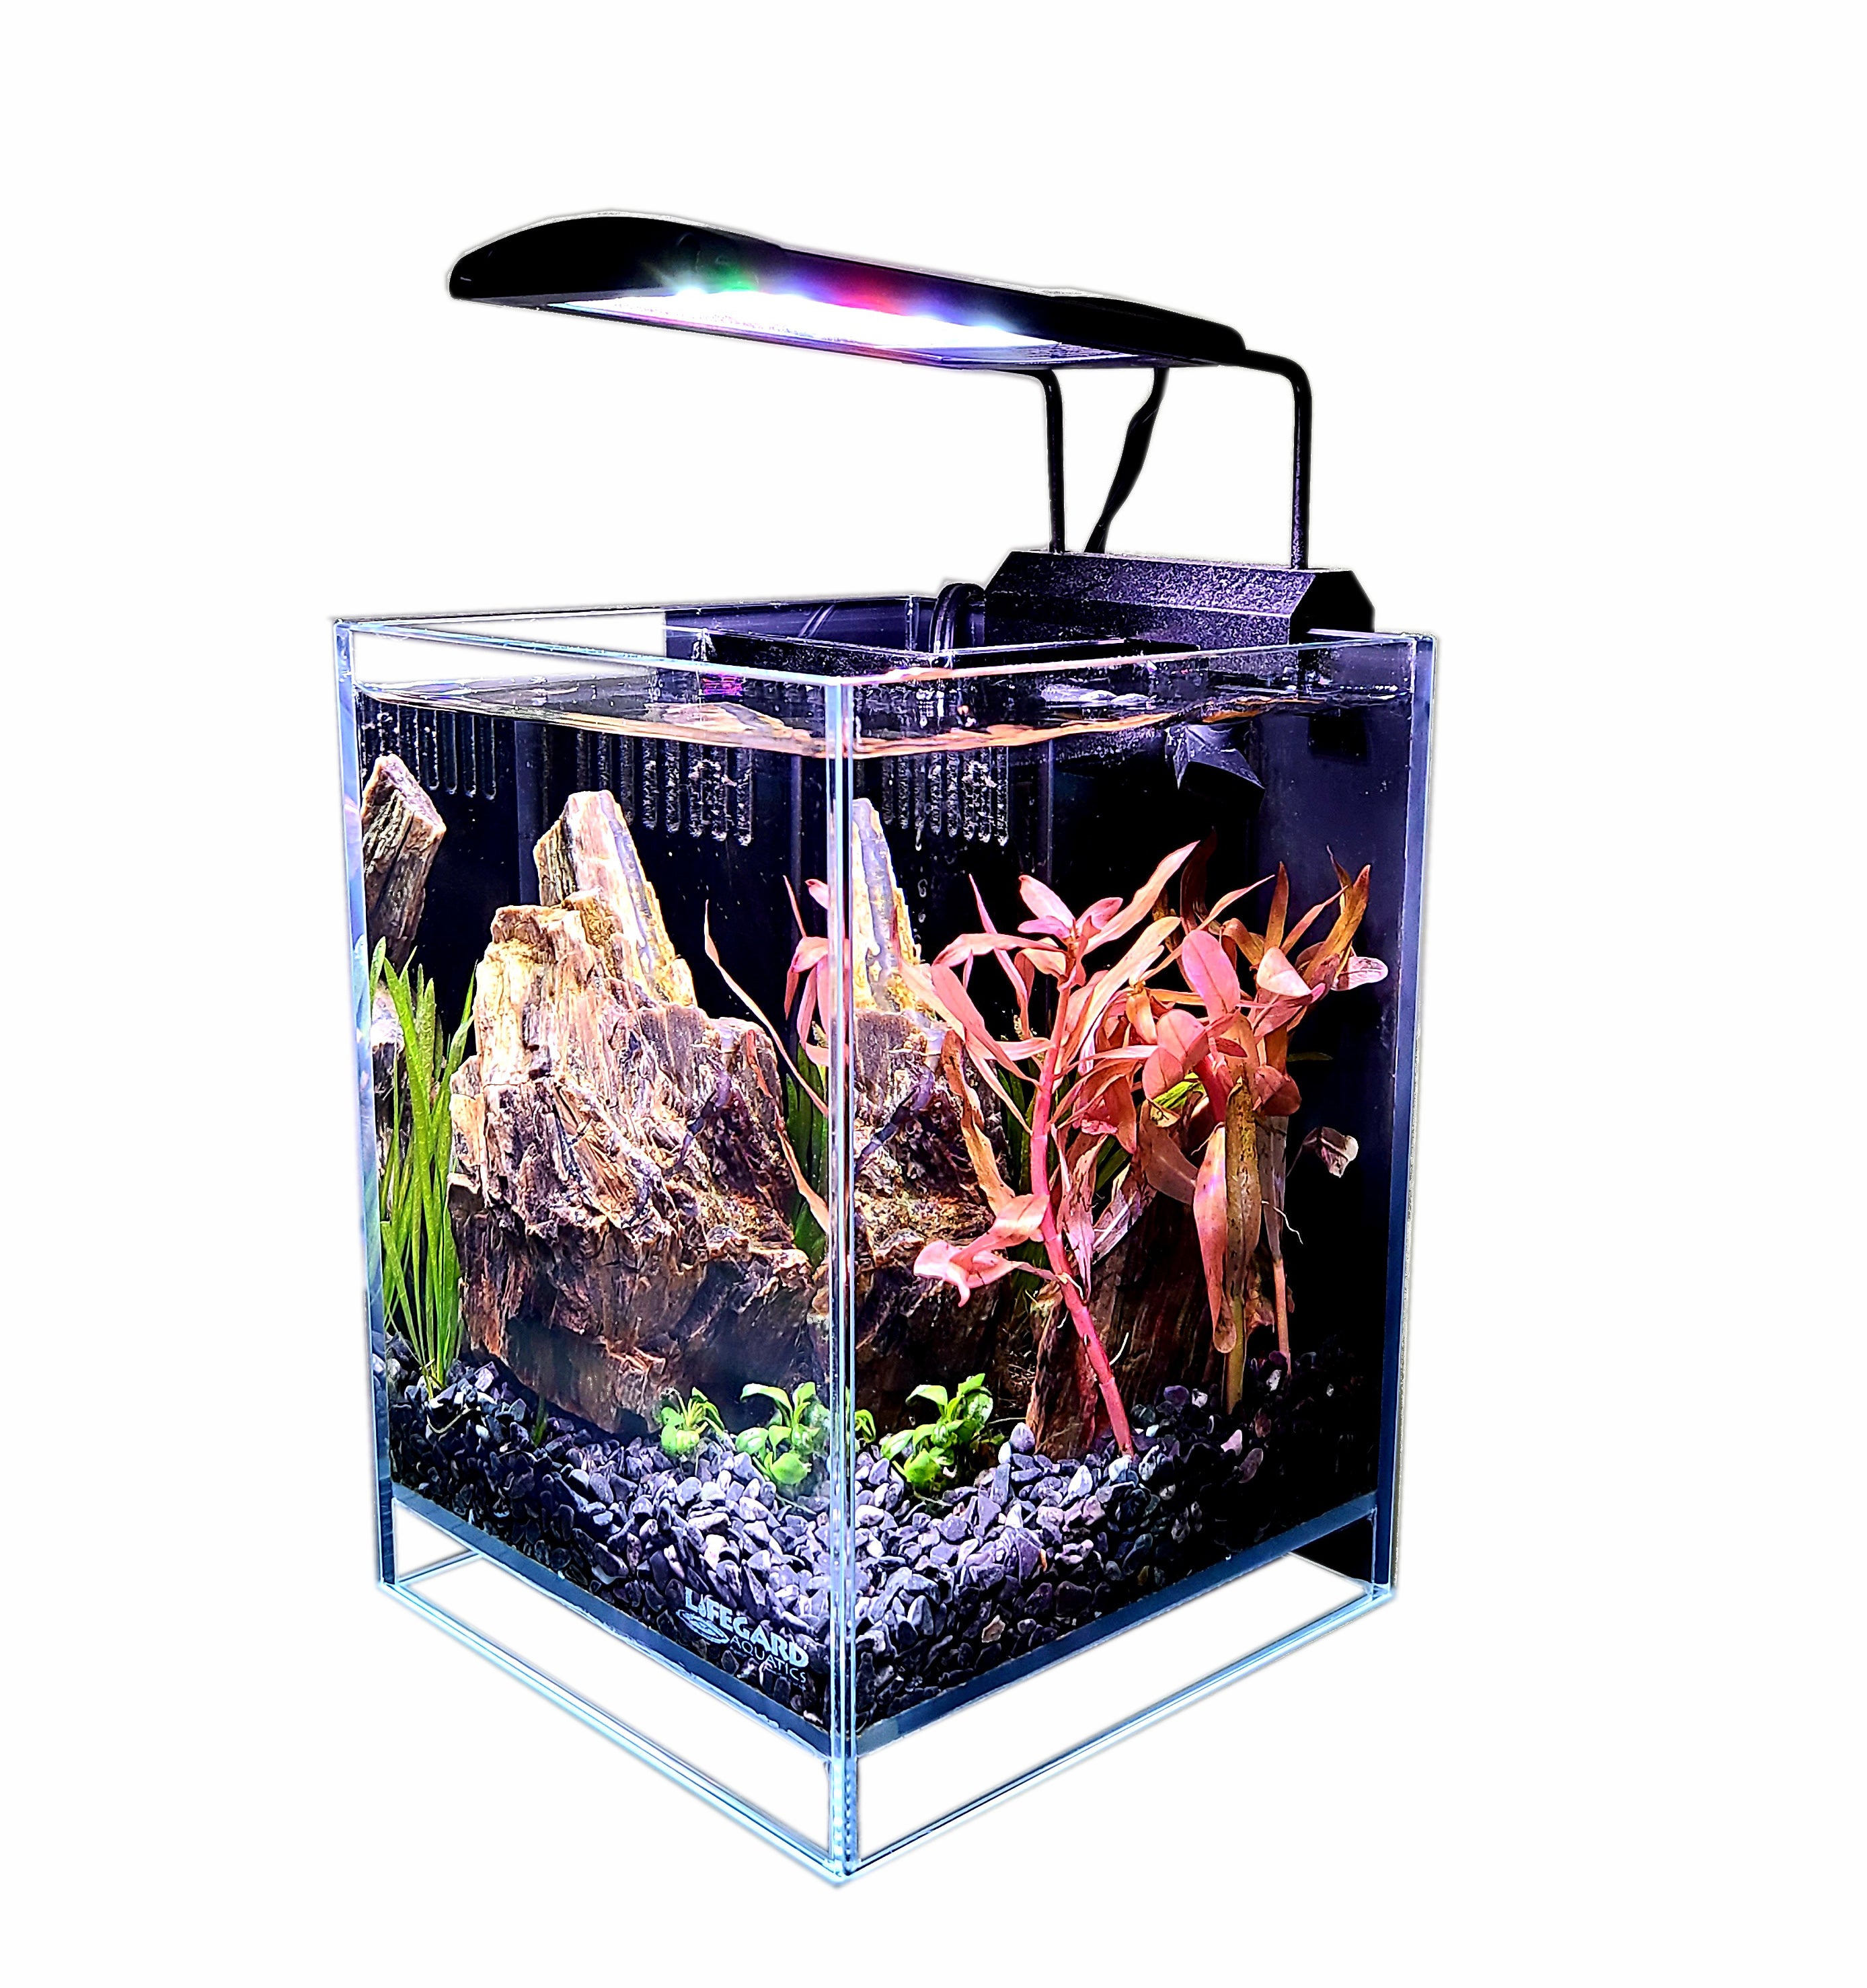  Lifegard Aquatics 15 Gallon Rimless Clear Glass Aquarium 5mm  (23.22x11.02x13.38) : Pet Supplies